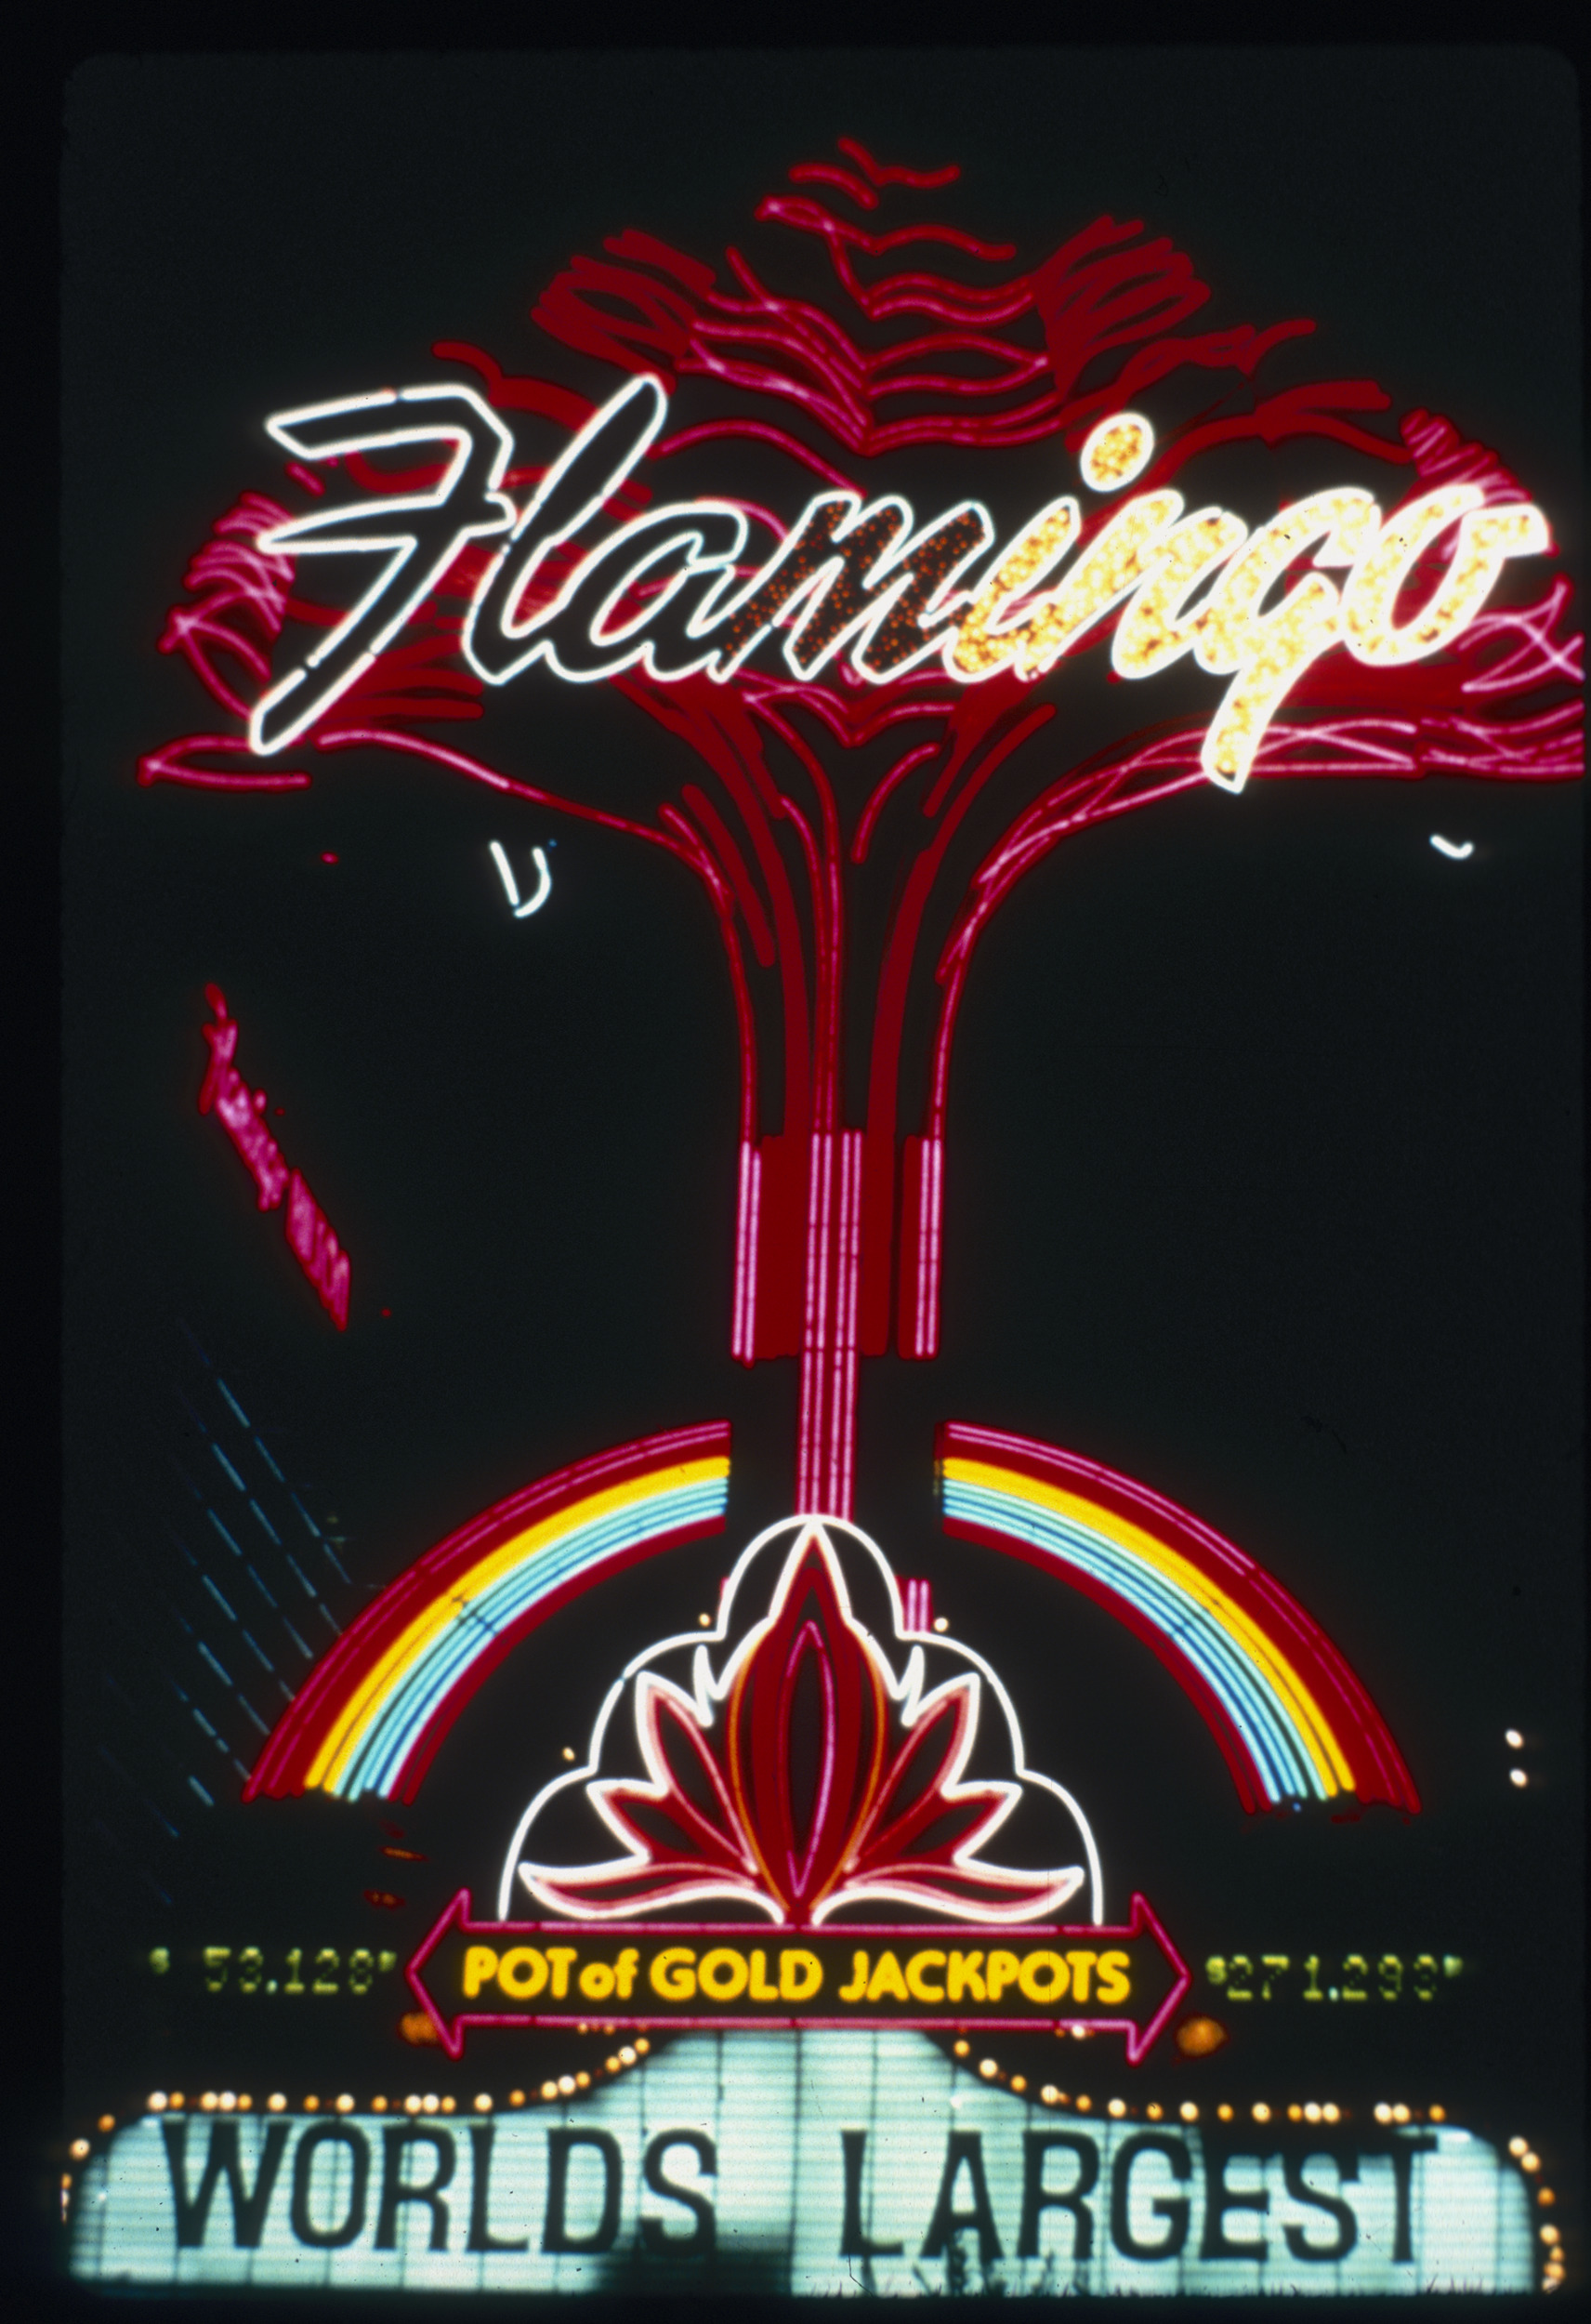 Slide of the Flamingo Hilton, Las Vegas, 1986